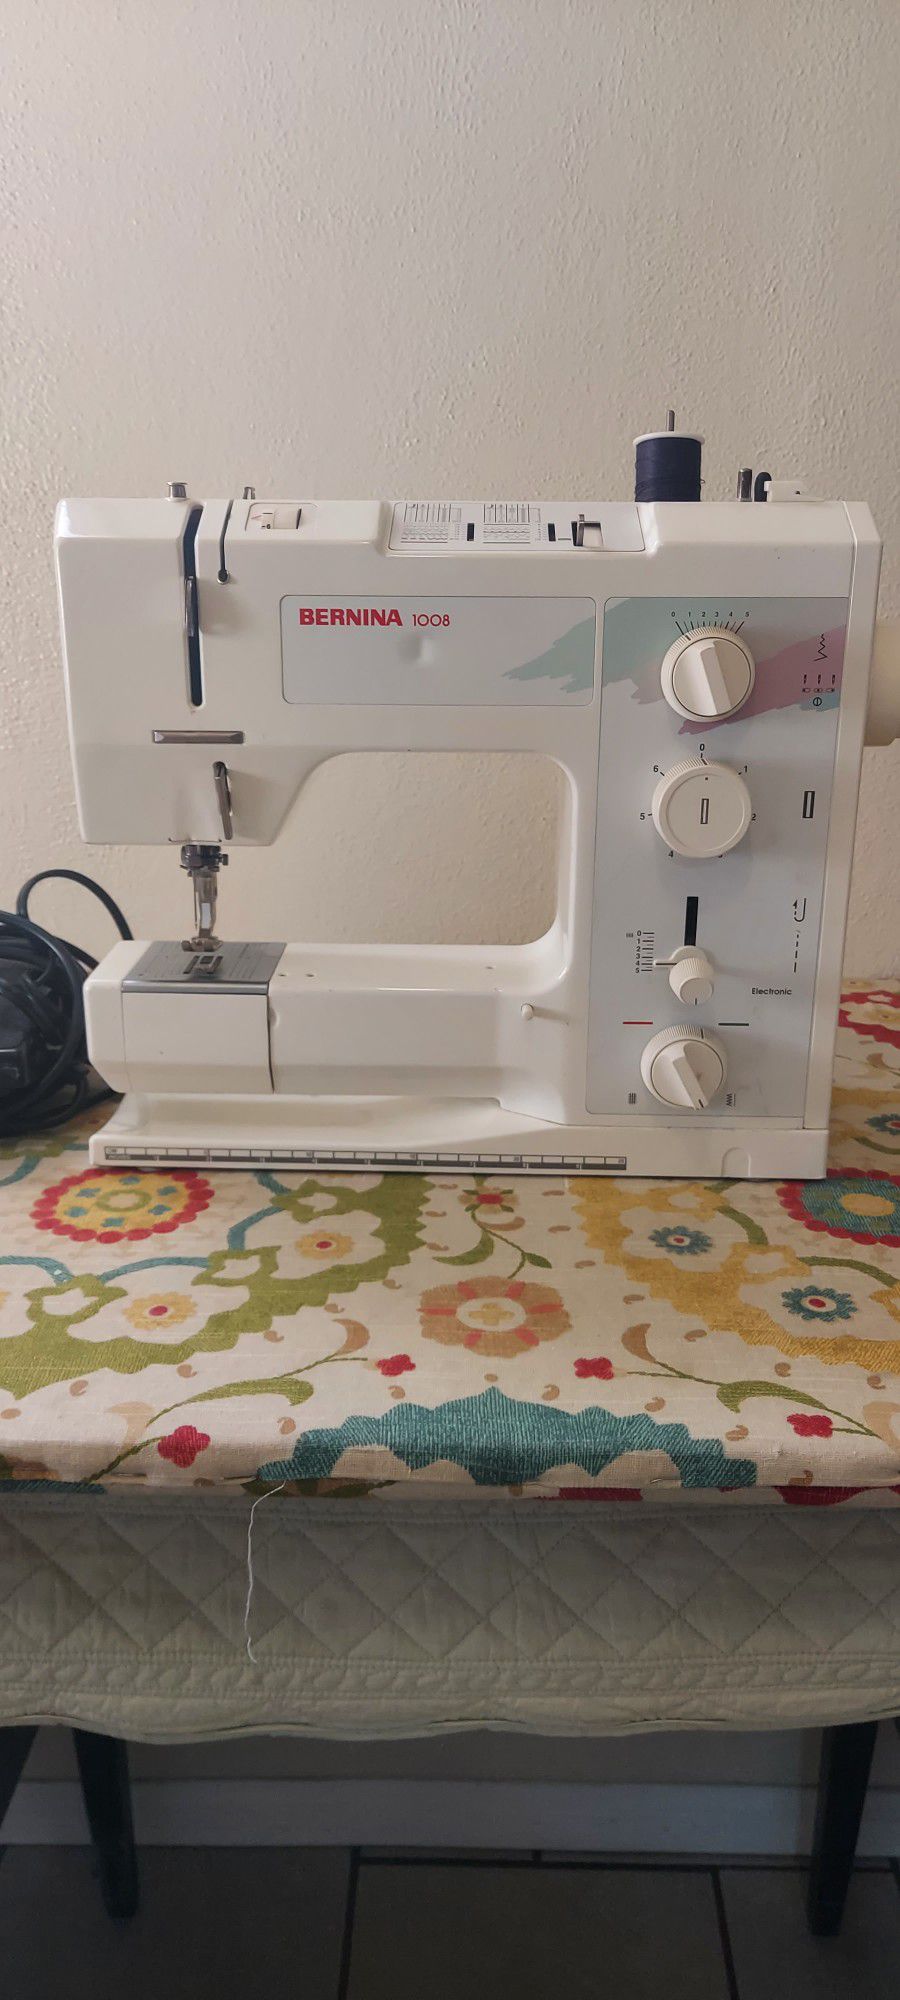 Sewing Machine, Bernina 1008